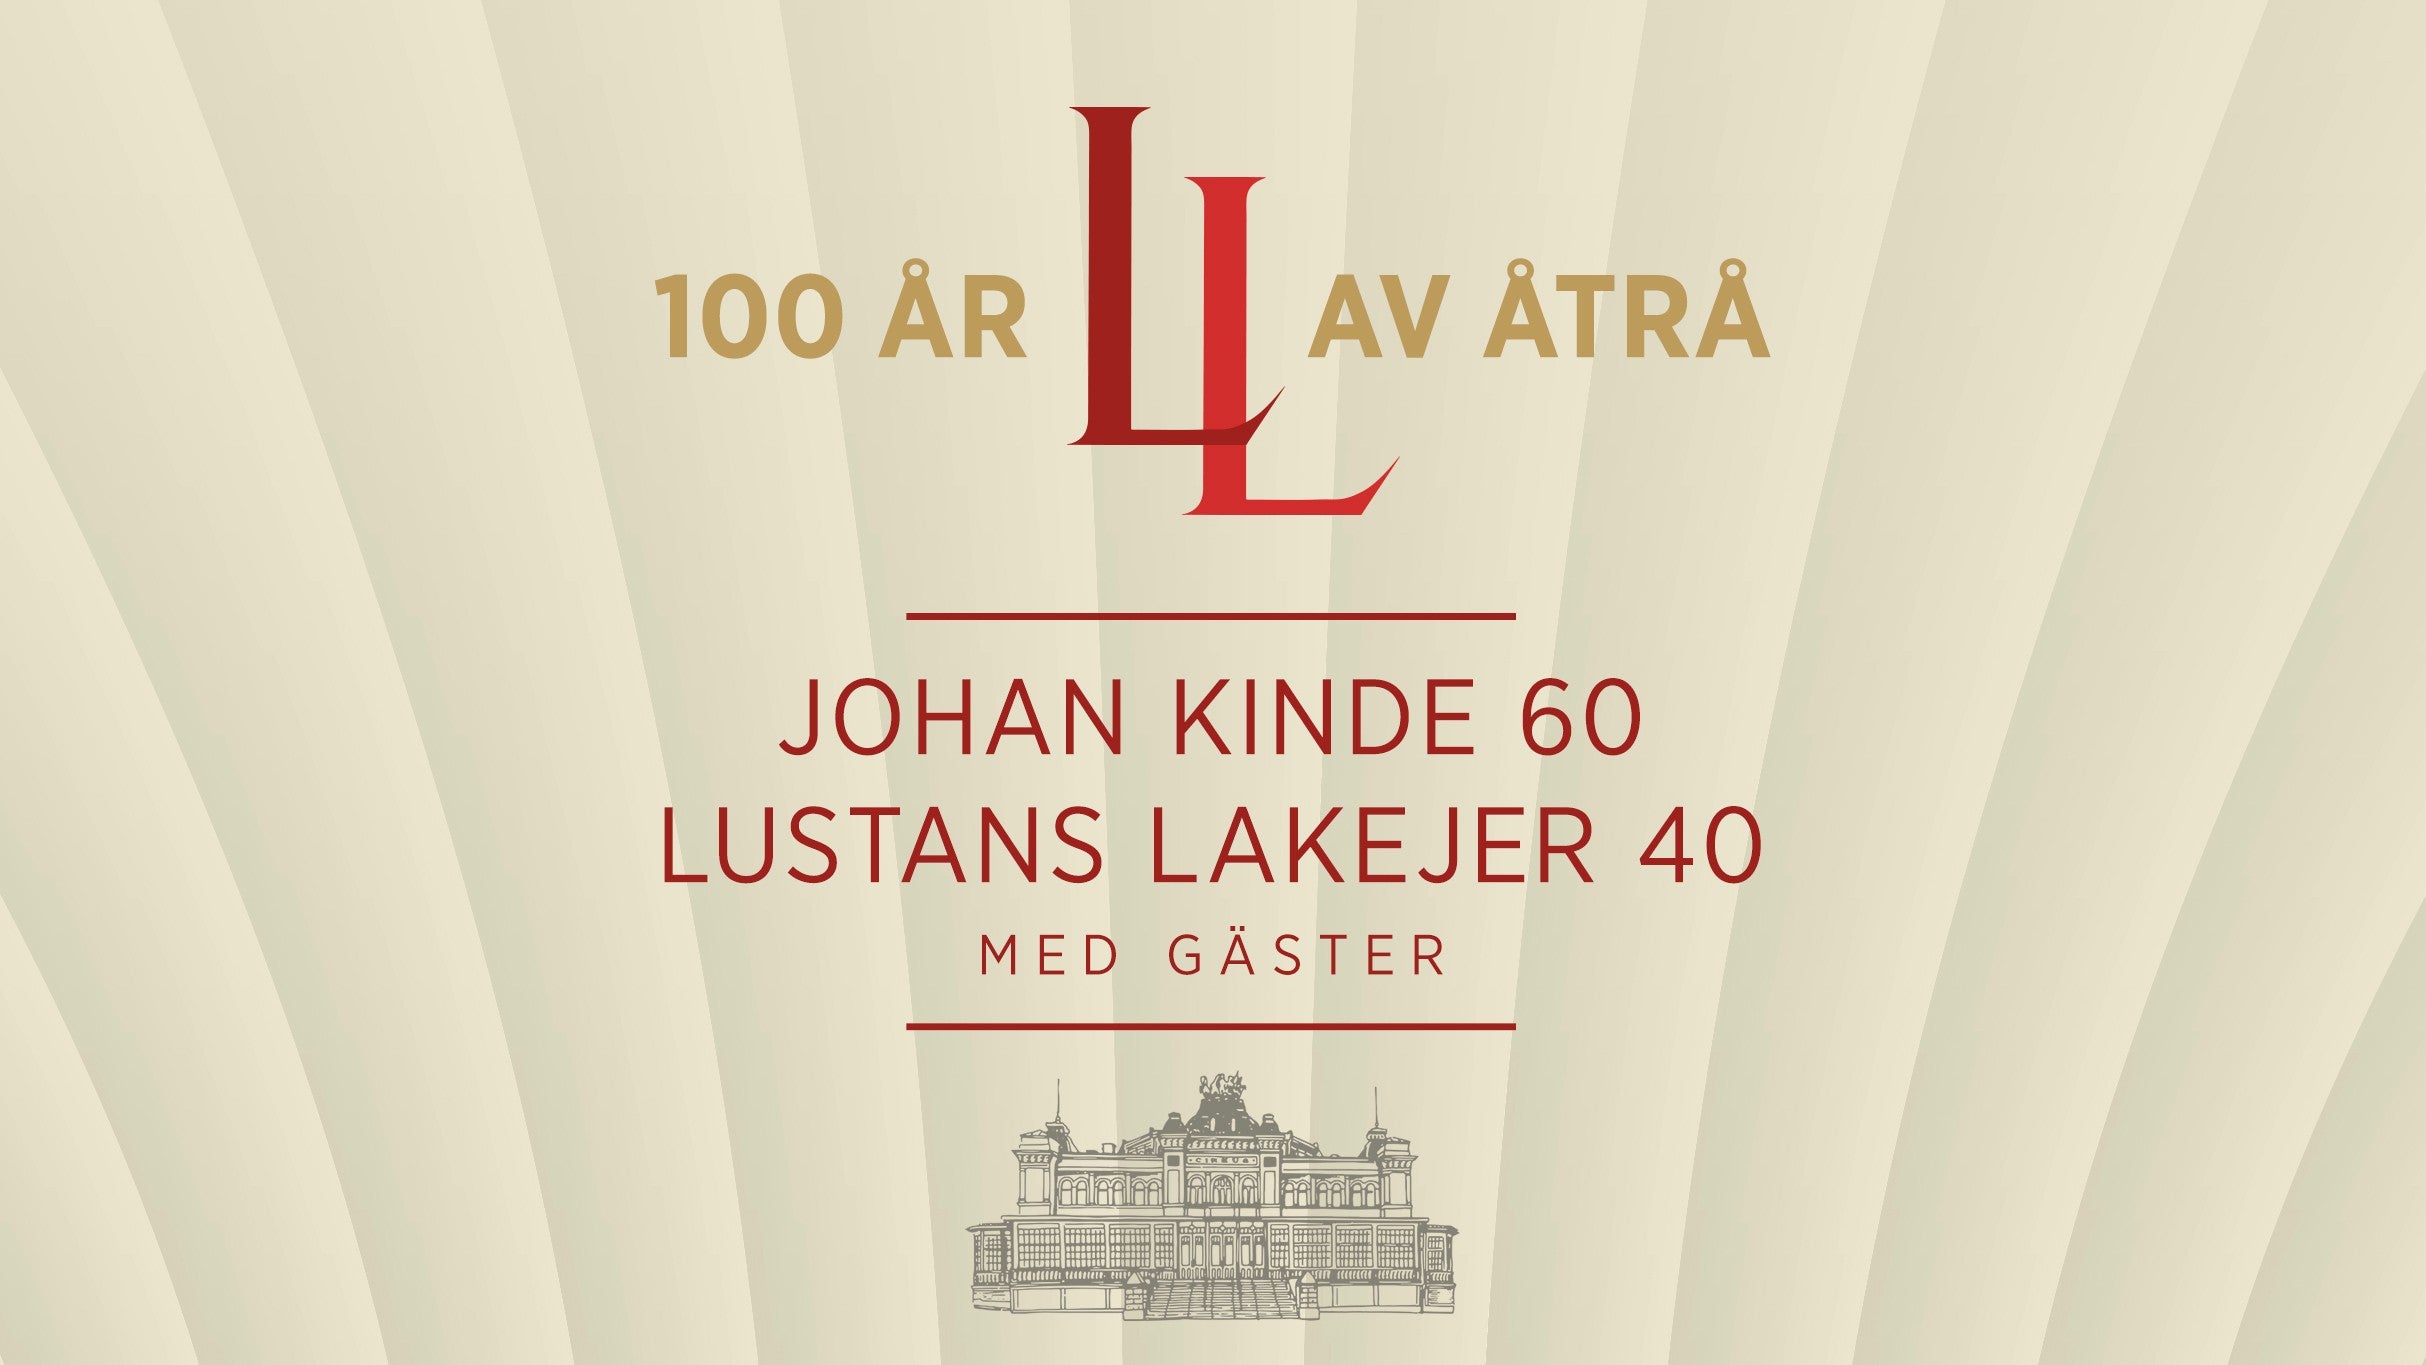 100 ar av atra - Johan Kinde  60. Lustans Lakejer 40 presale information on freepresalepasswords.com